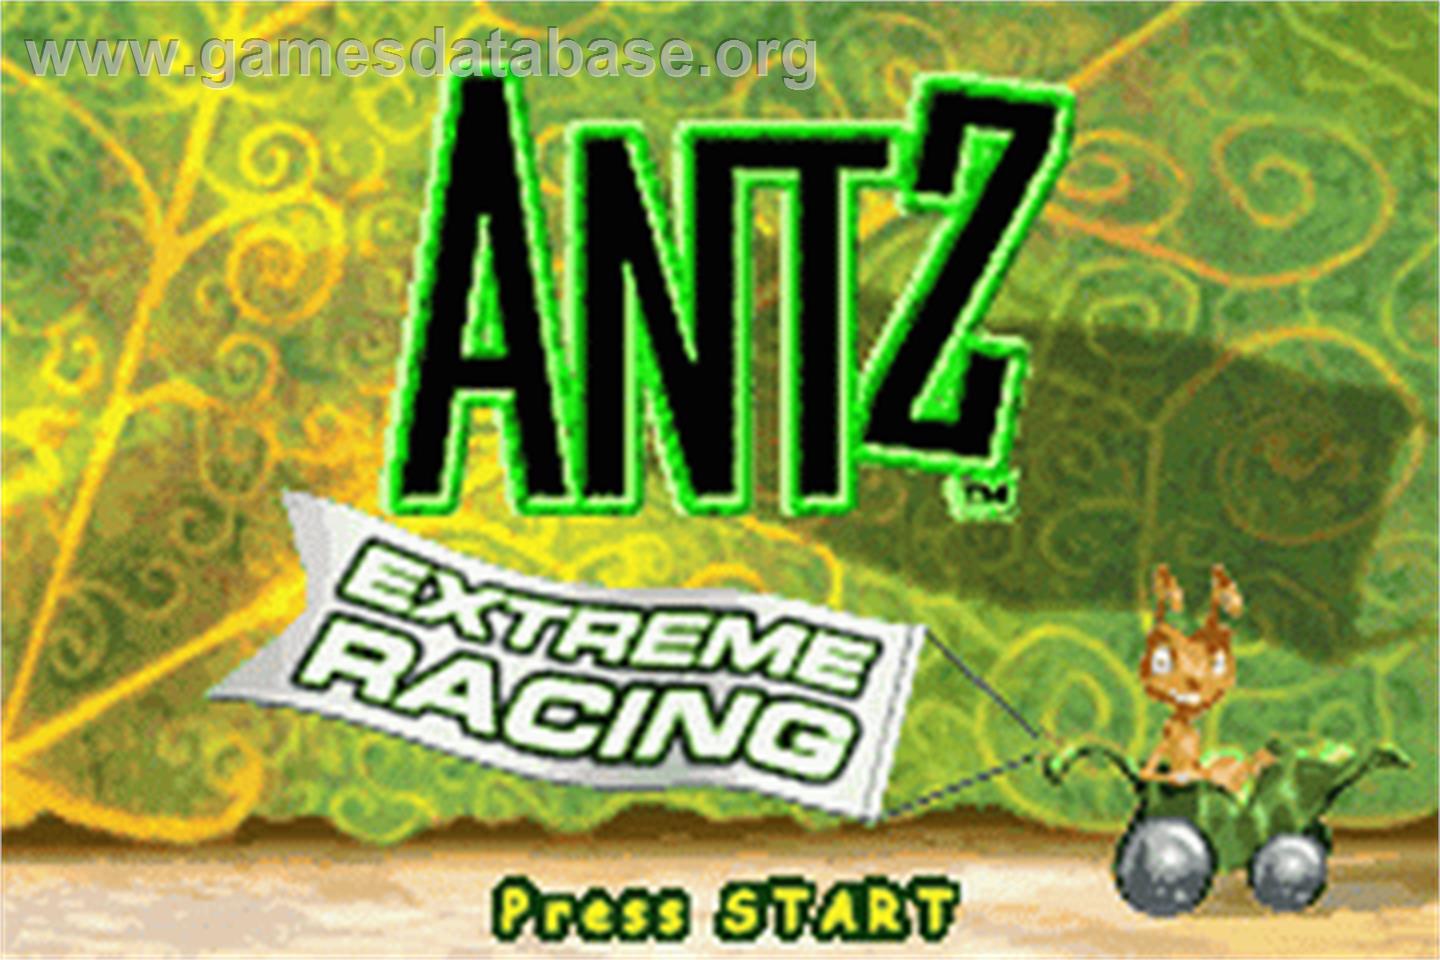 Antz Extreme Racing - Nintendo Game Boy Advance - Artwork - Title Screen